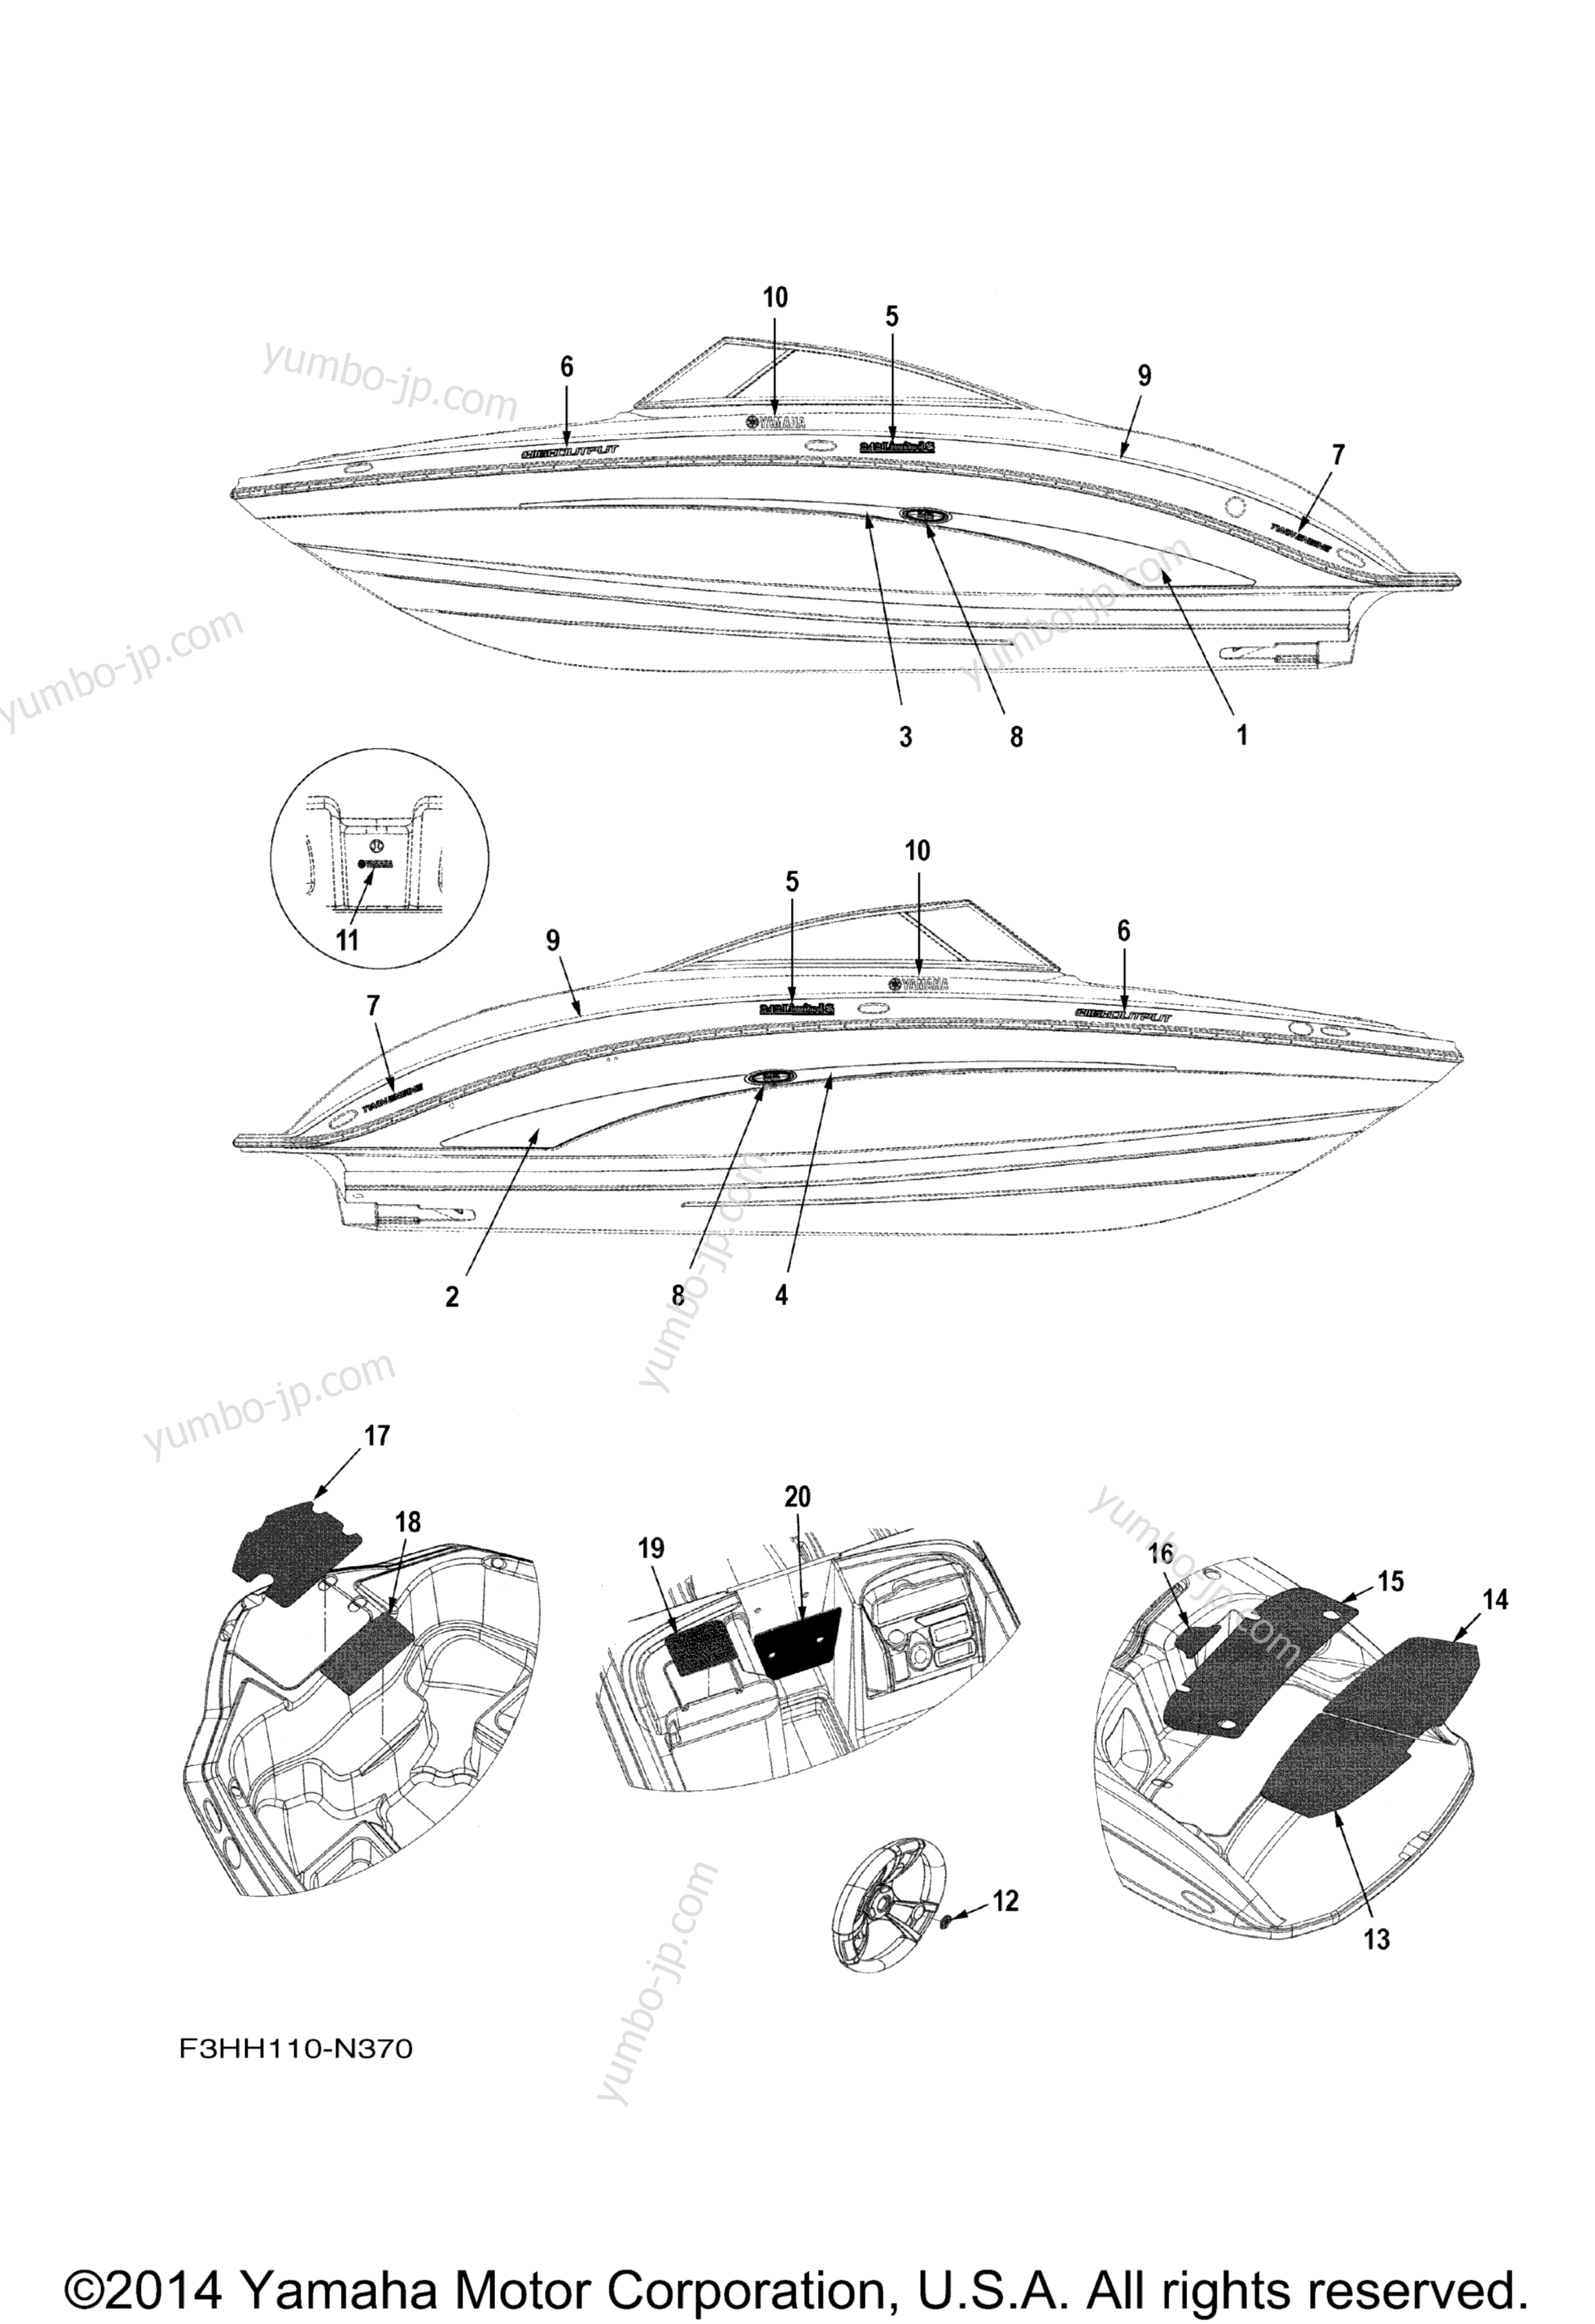 Graphics & Mats for boats YAMAHA 242 LIMITED S CALIFORNIA (SXT1800GLN) CA 2014 year